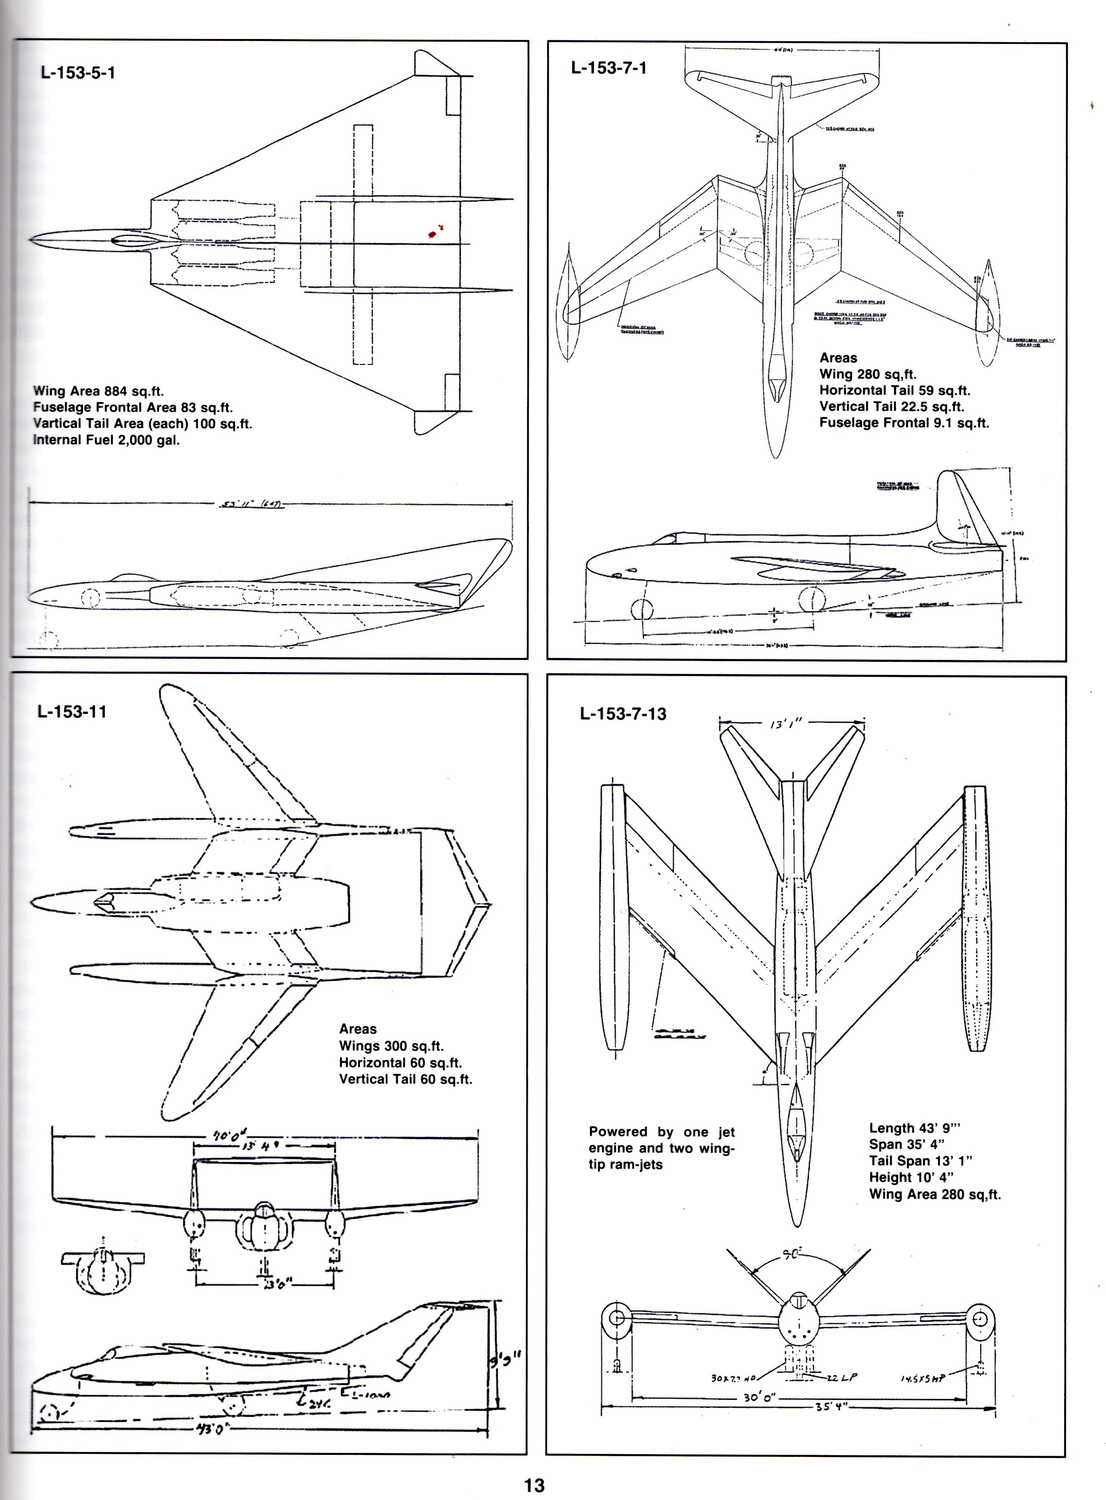 Lockheed XF-90 Penetration Fighter | IPMS/USA Reviews